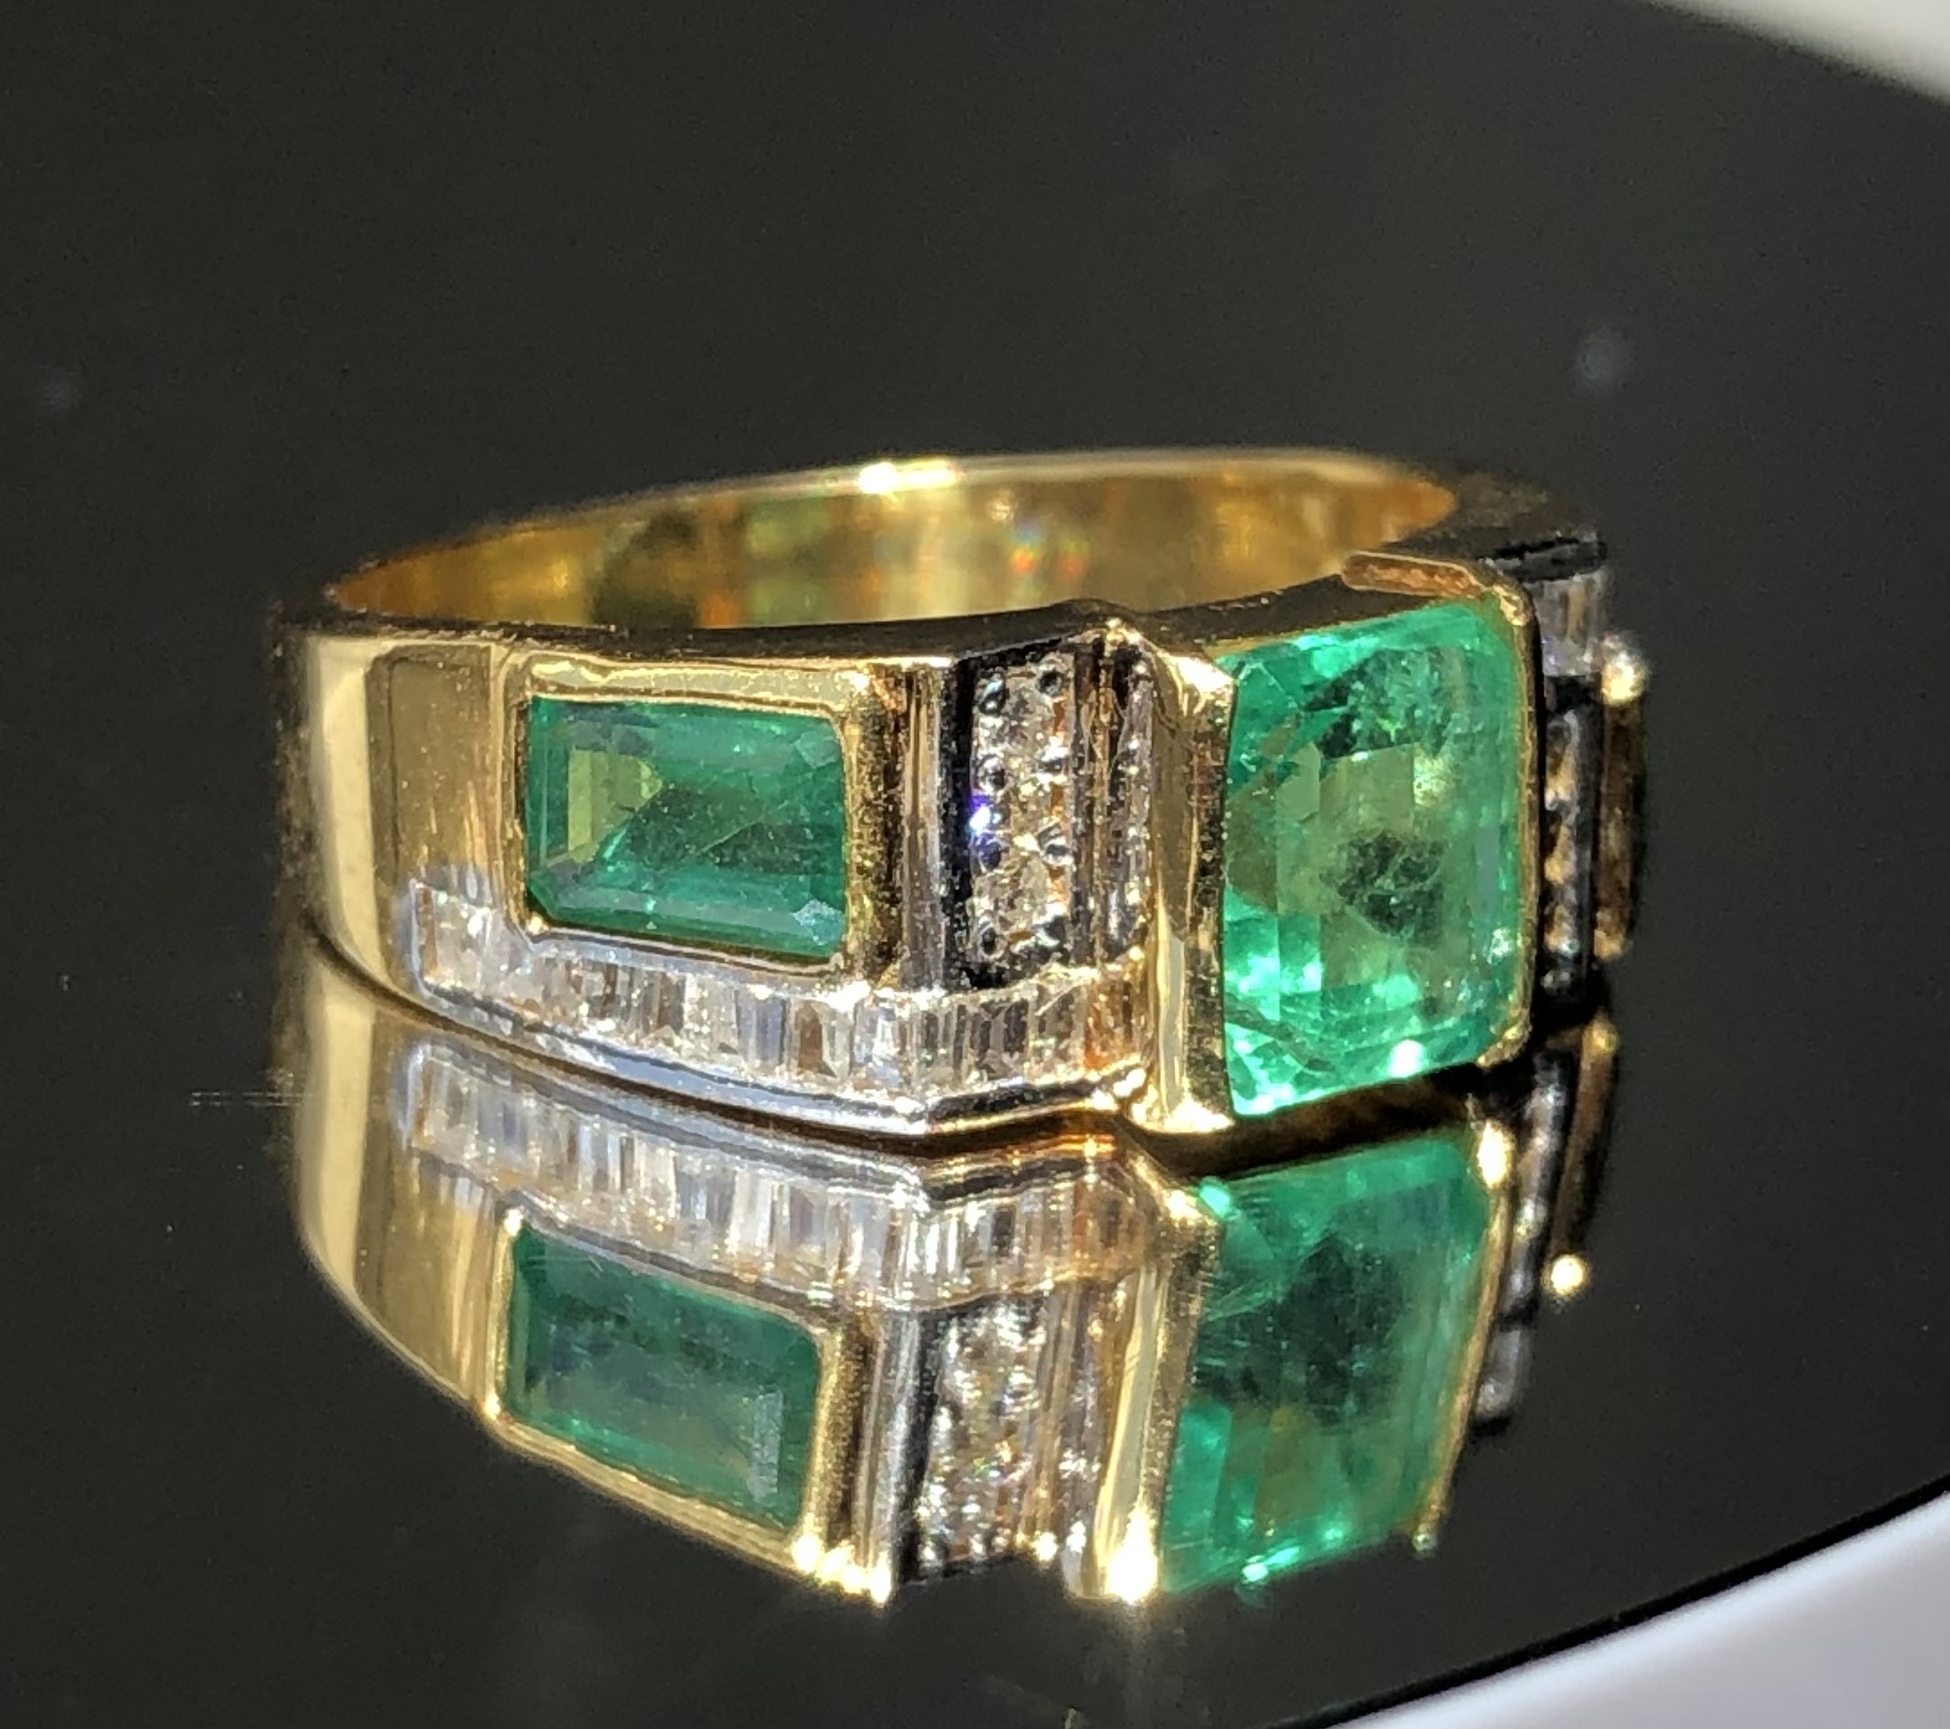 Beautiful 2.80 Carat Natural Emerald Ring With Natural Diamonds and 18k Gold - Image 3 of 7